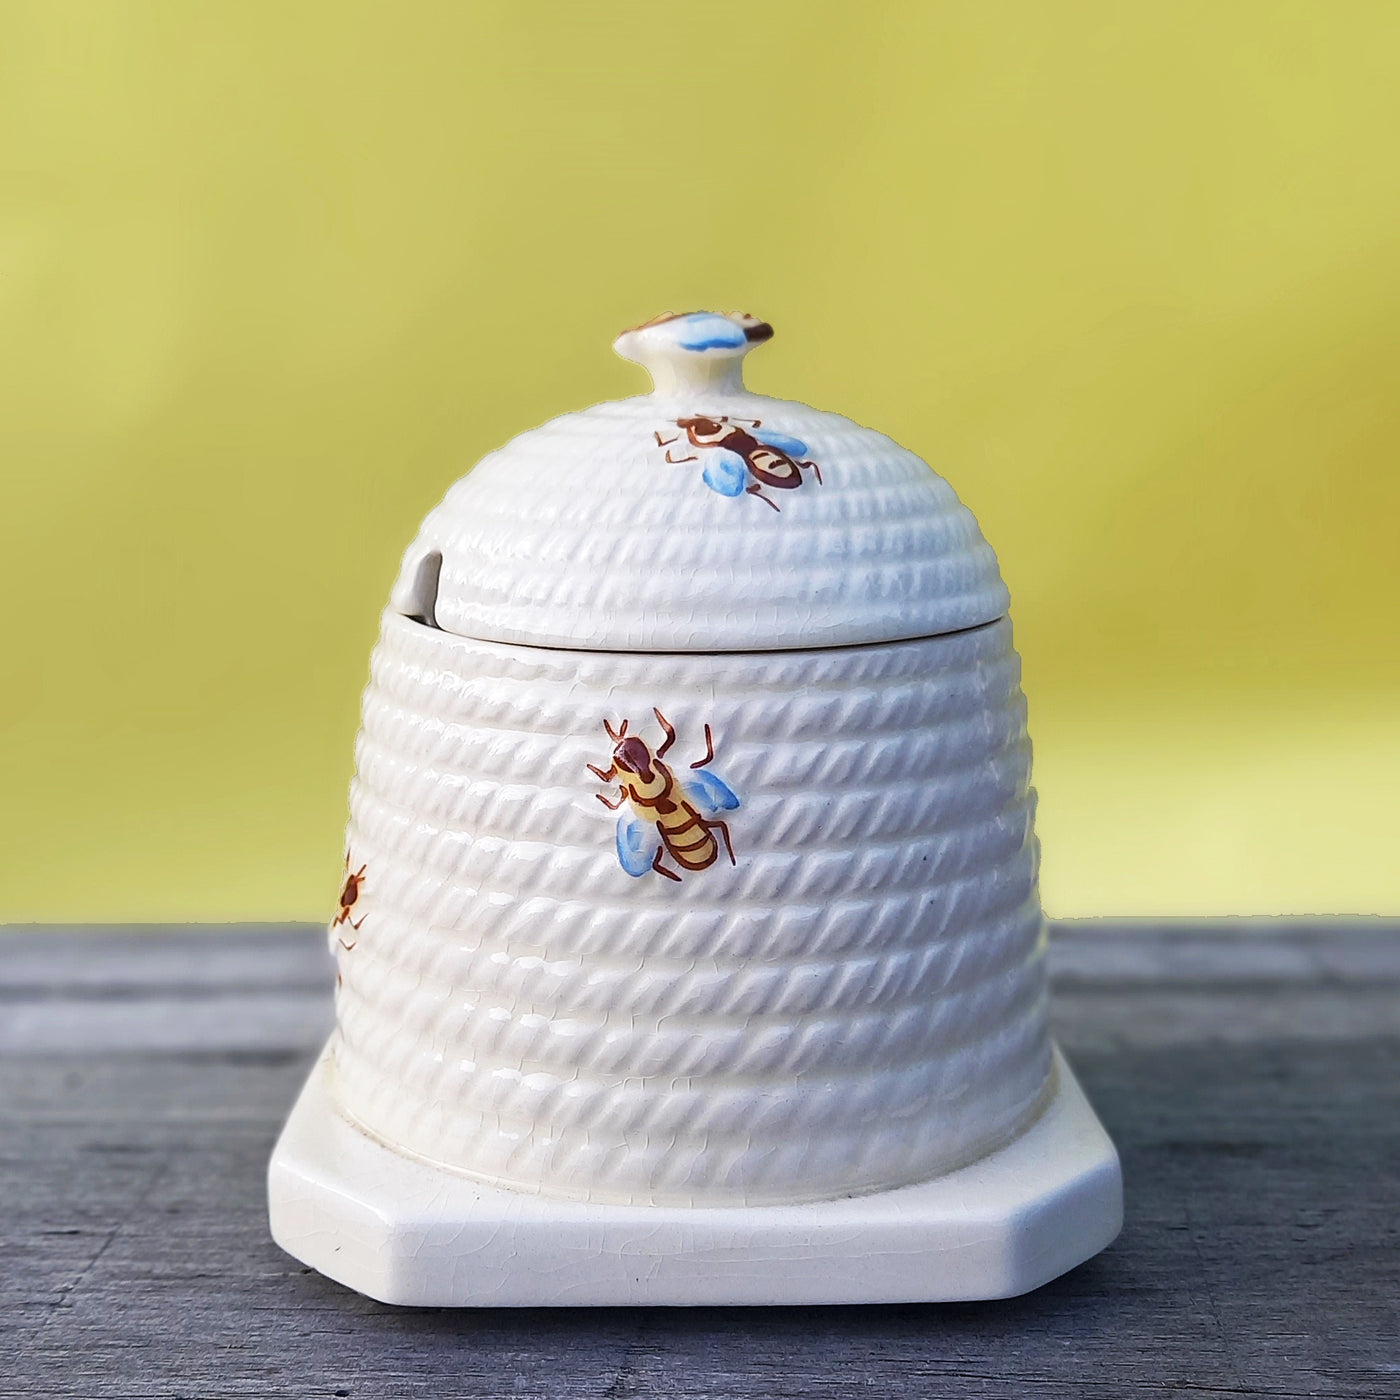 The hive honey pot